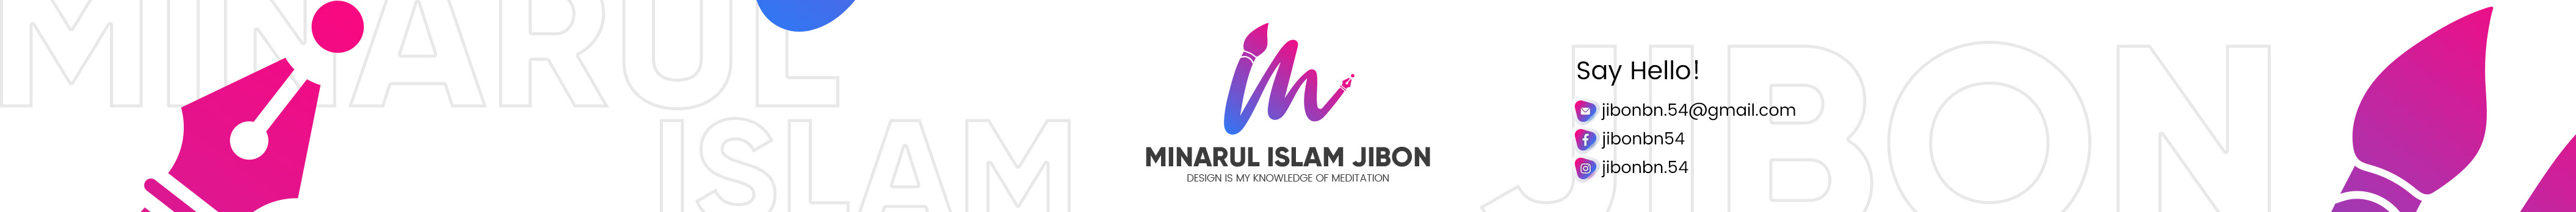 Banner de perfil de Minarul Islam Jibon